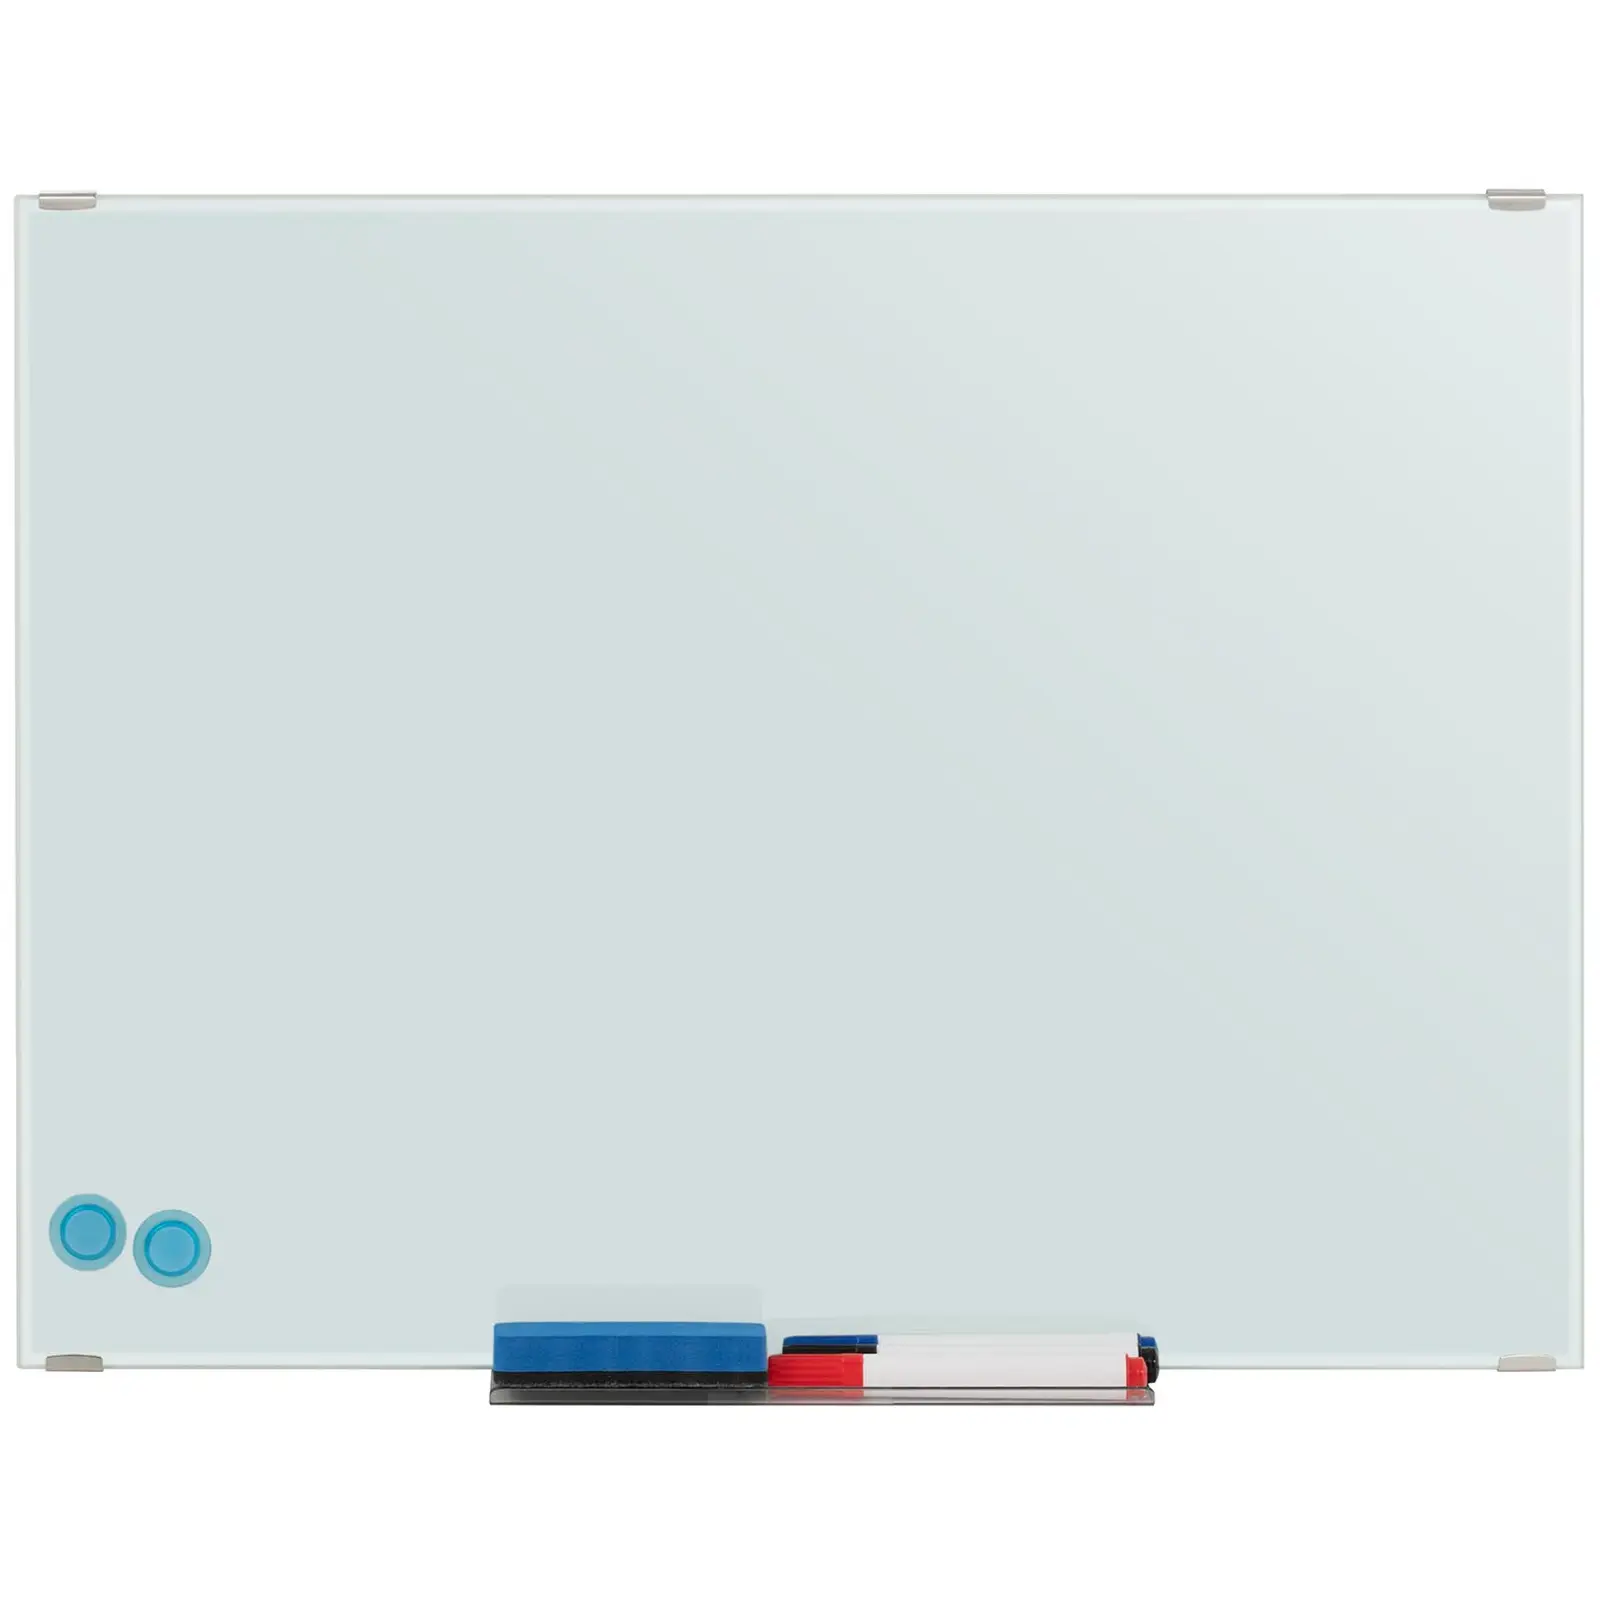 Lavagna magnetica bianca per pennarelli - 60 x 45 x 0,4 cm